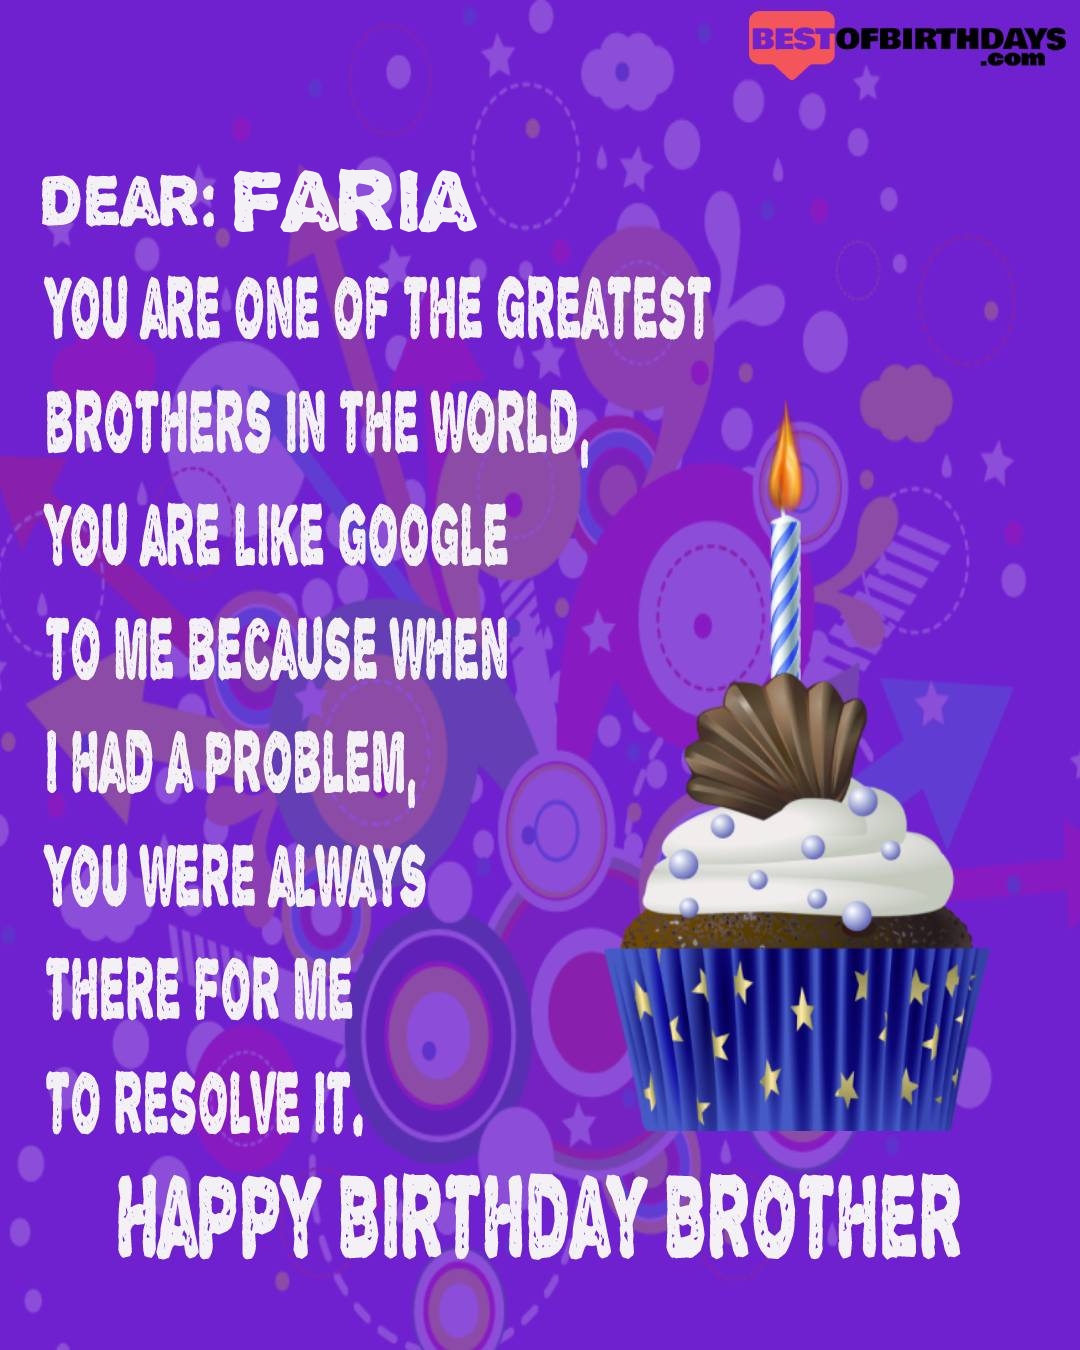 Happy birthday faria bhai brother bro